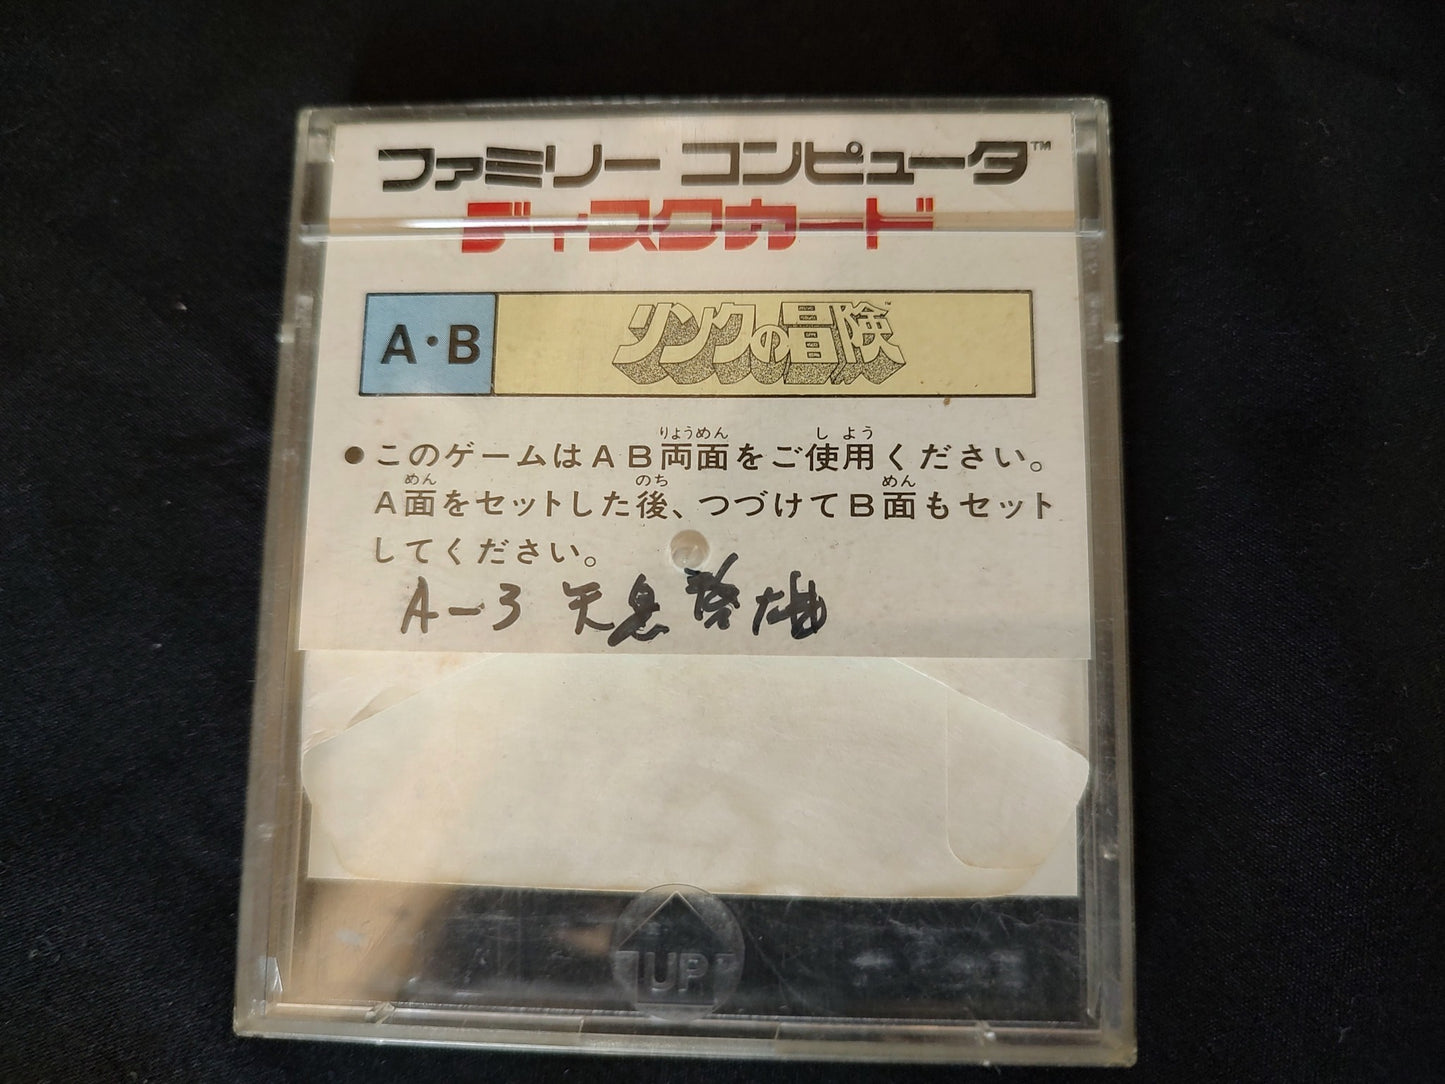 ZELDA 2 ADVENTURE OF LINK FAMICOM (NES) Disk System, Game disk and box-f0515-